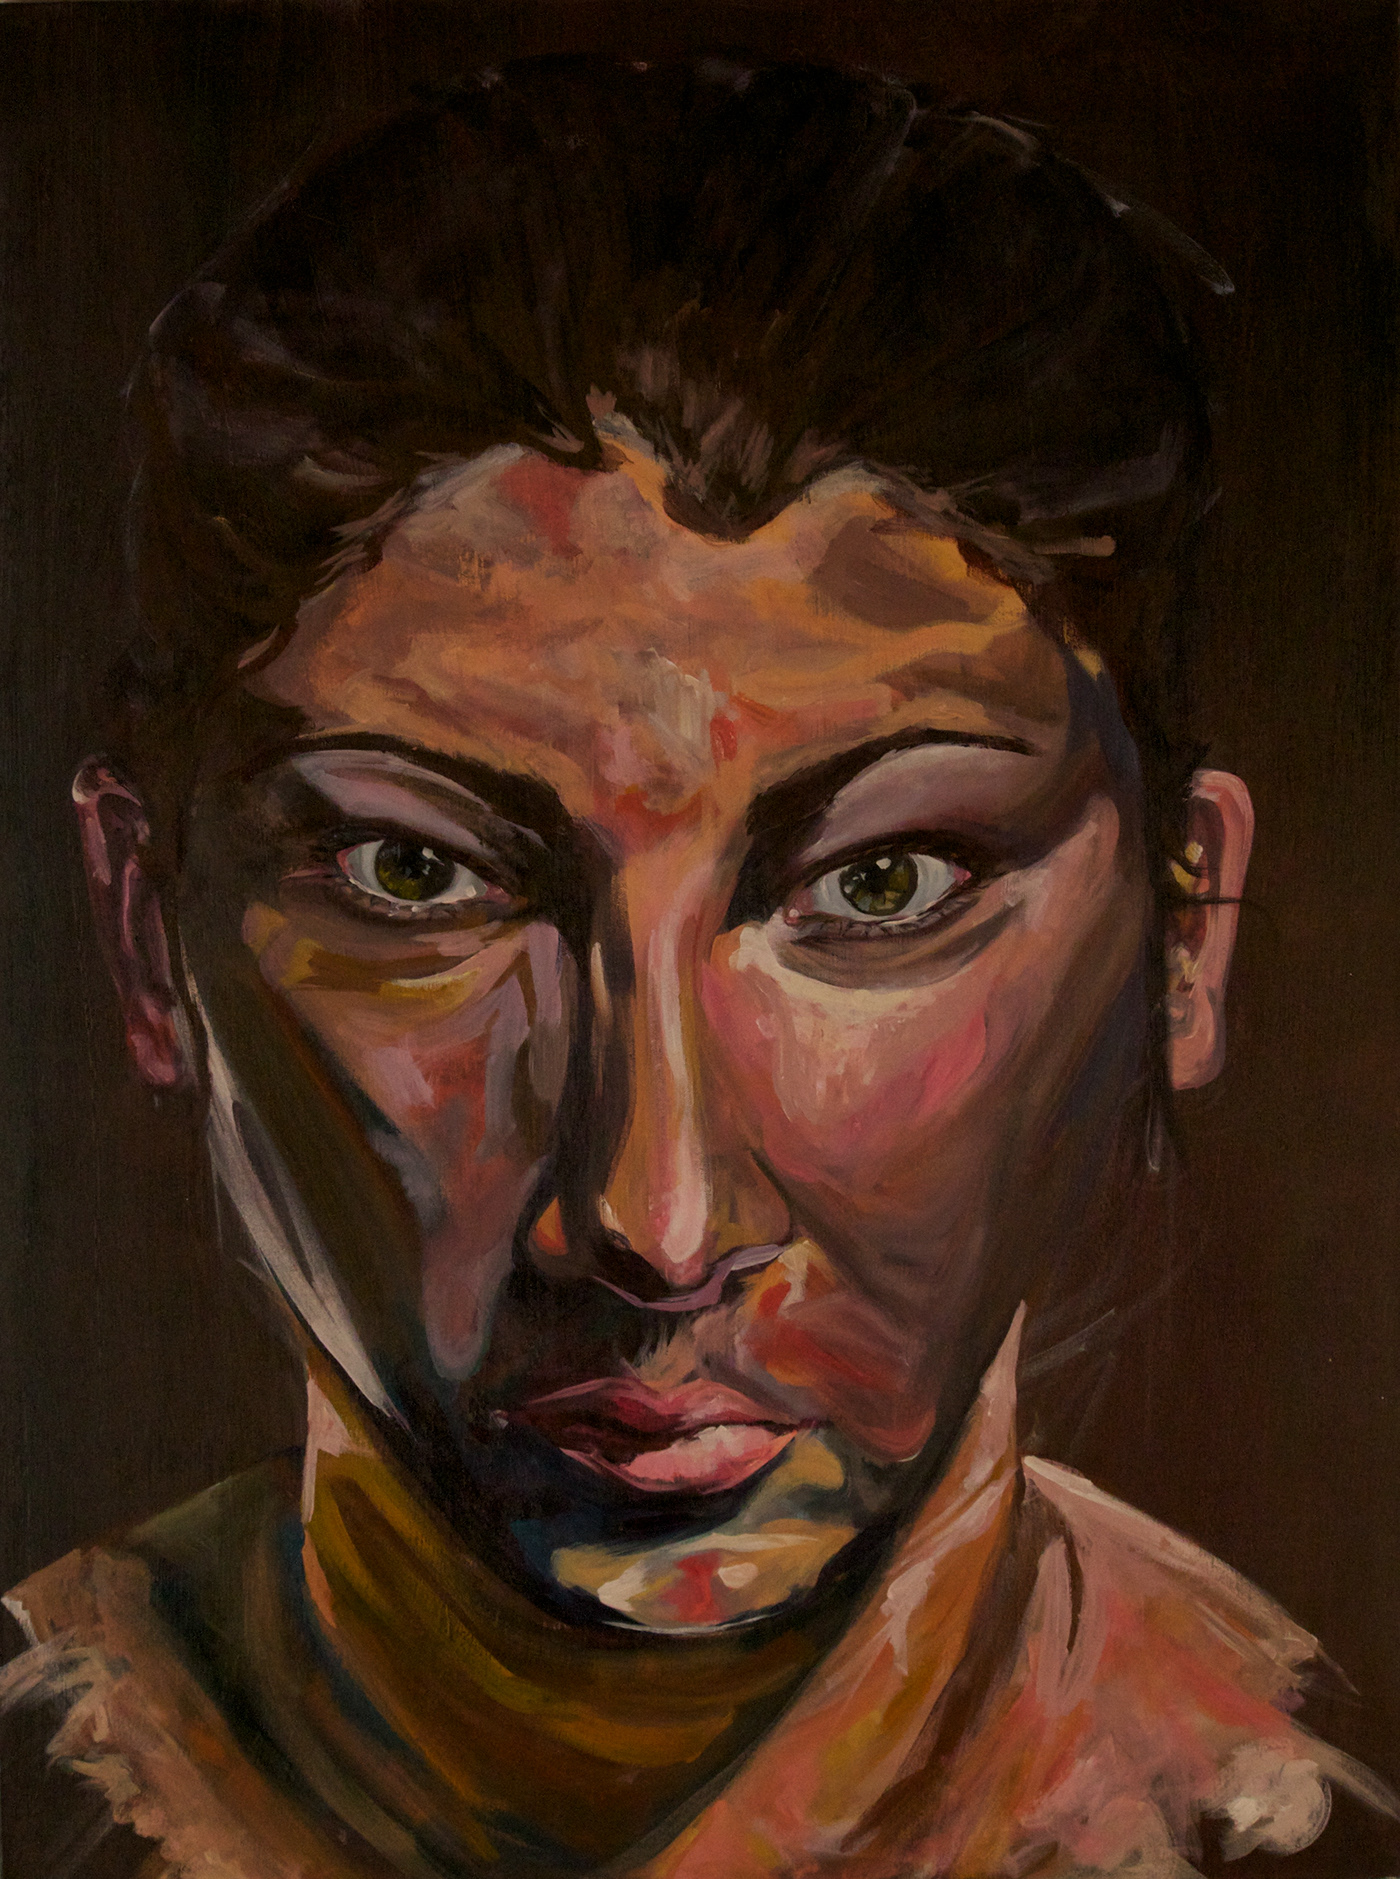 acrylic on canvas acrylic painting arcylic artwork fine art painting   self portrait